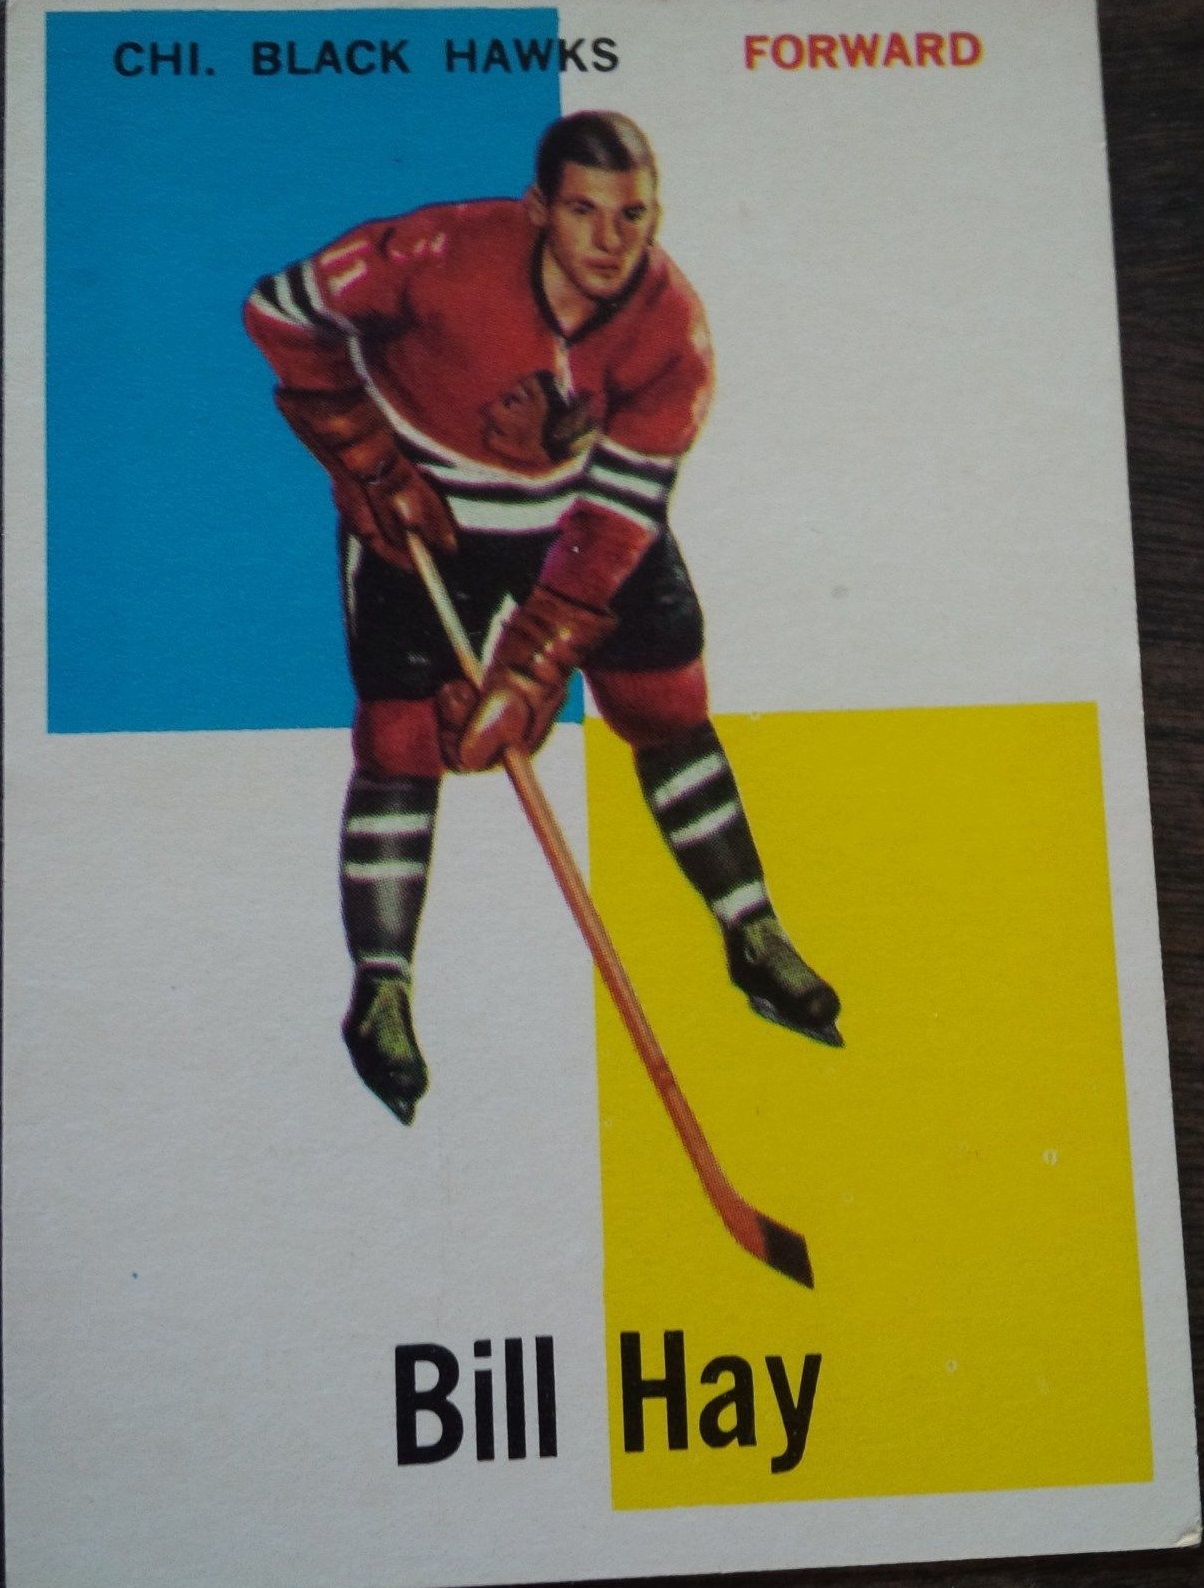  Bill Hay player image